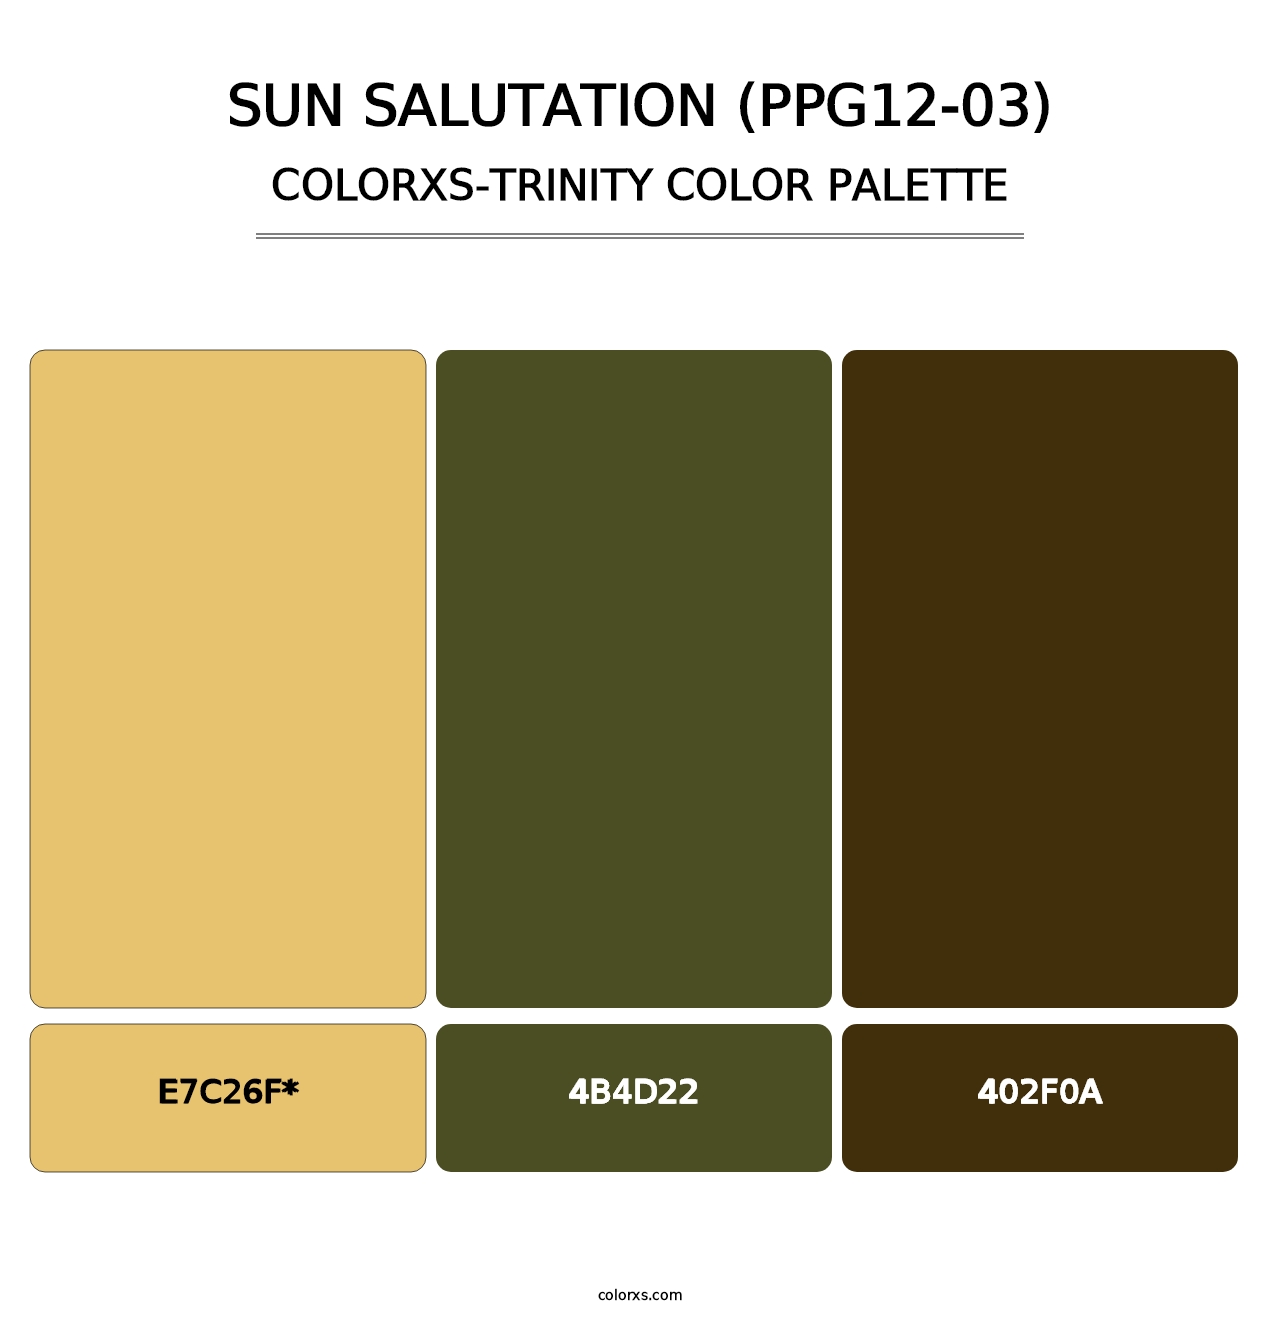 Sun Salutation (PPG12-03) - Colorxs Trinity Palette